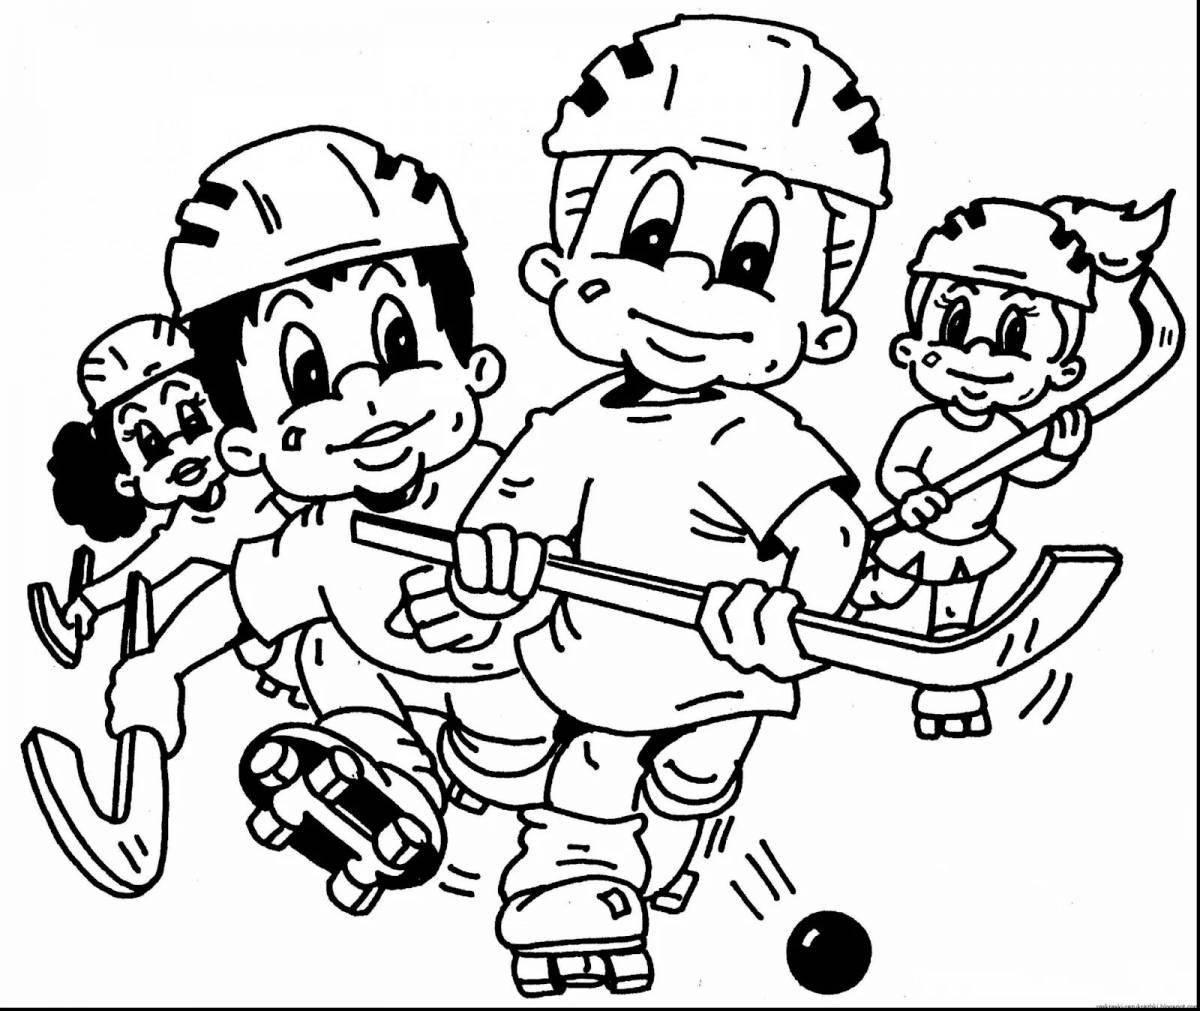 Joyful sports coloring book for kids